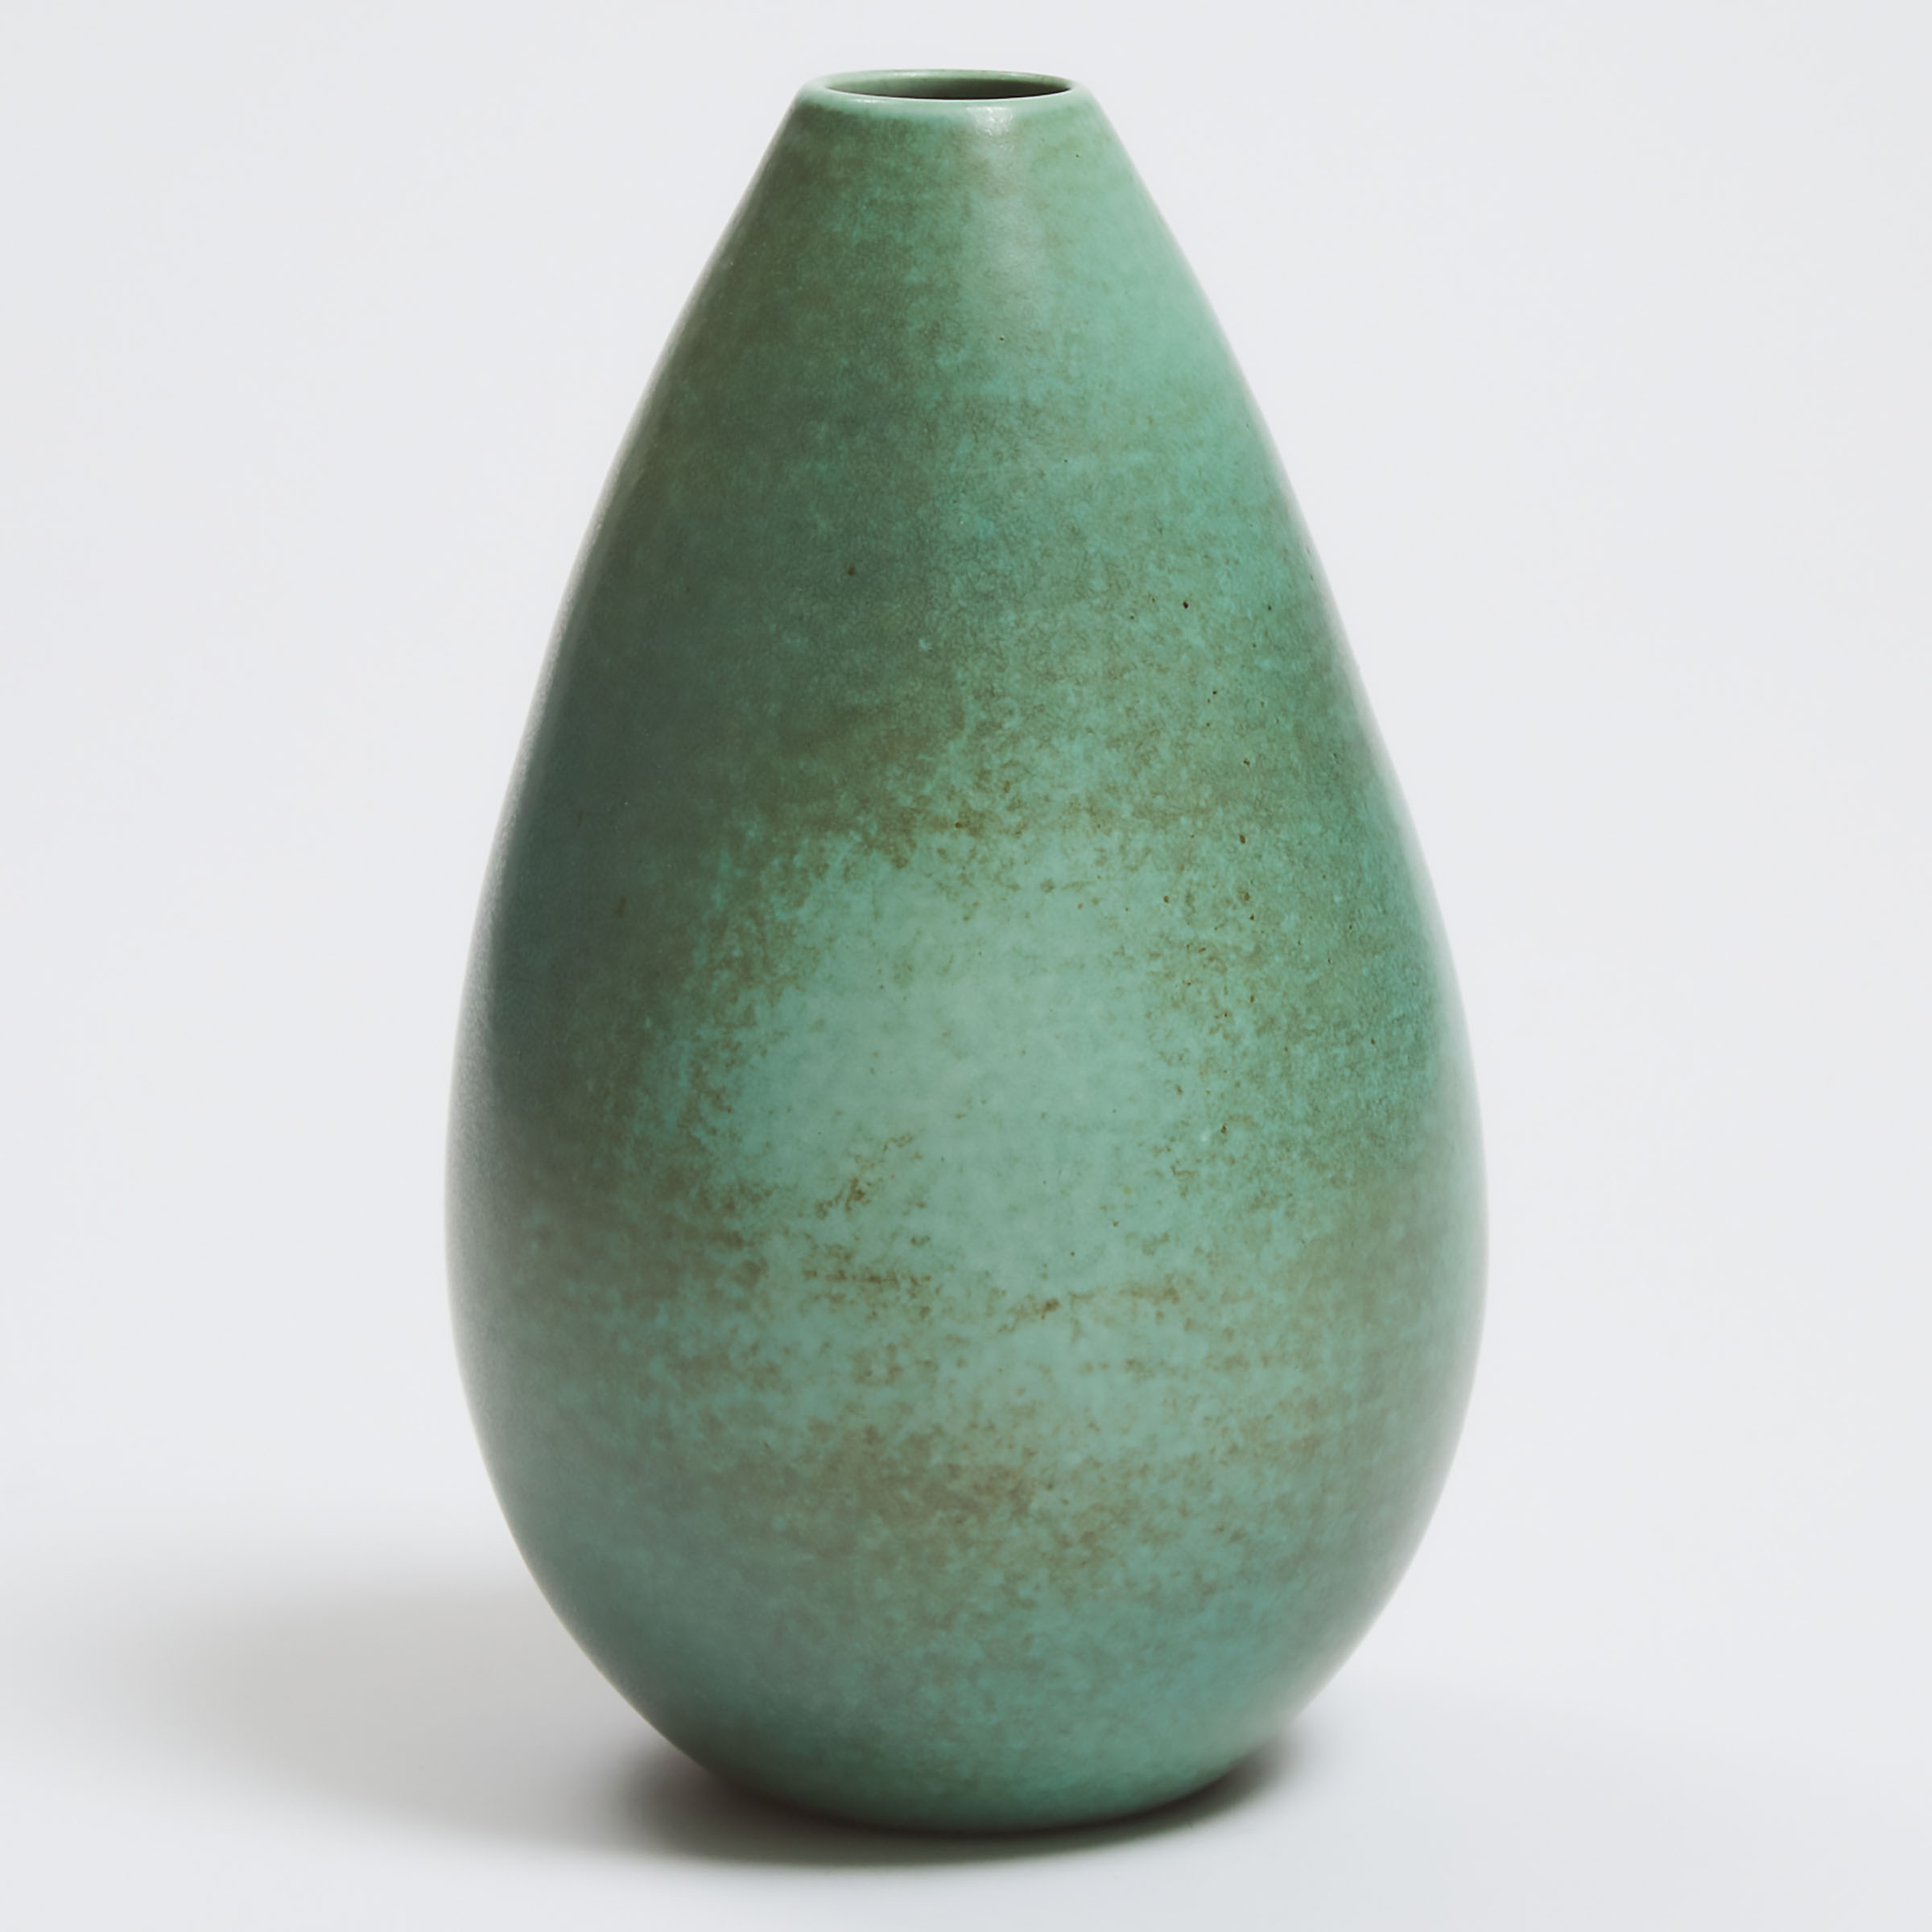 Deichmann Mottled Green Glazed Vase, Kjeld & Erica Deichmann, mid-20th century